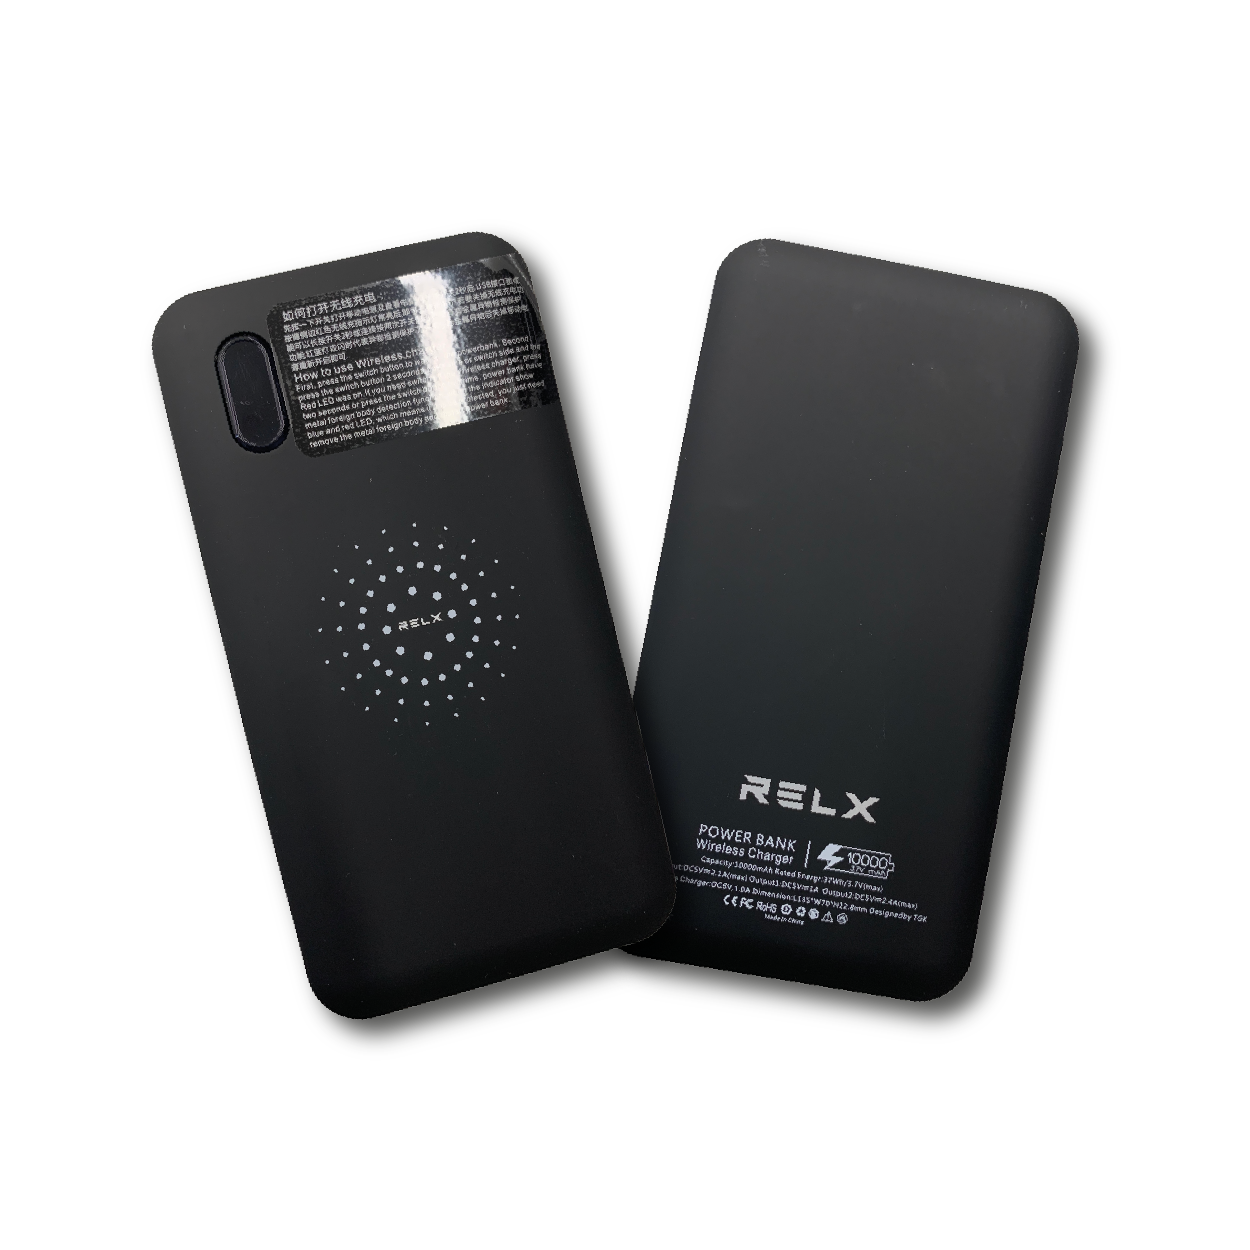 RELX Wireless Power Bank 10000mAh